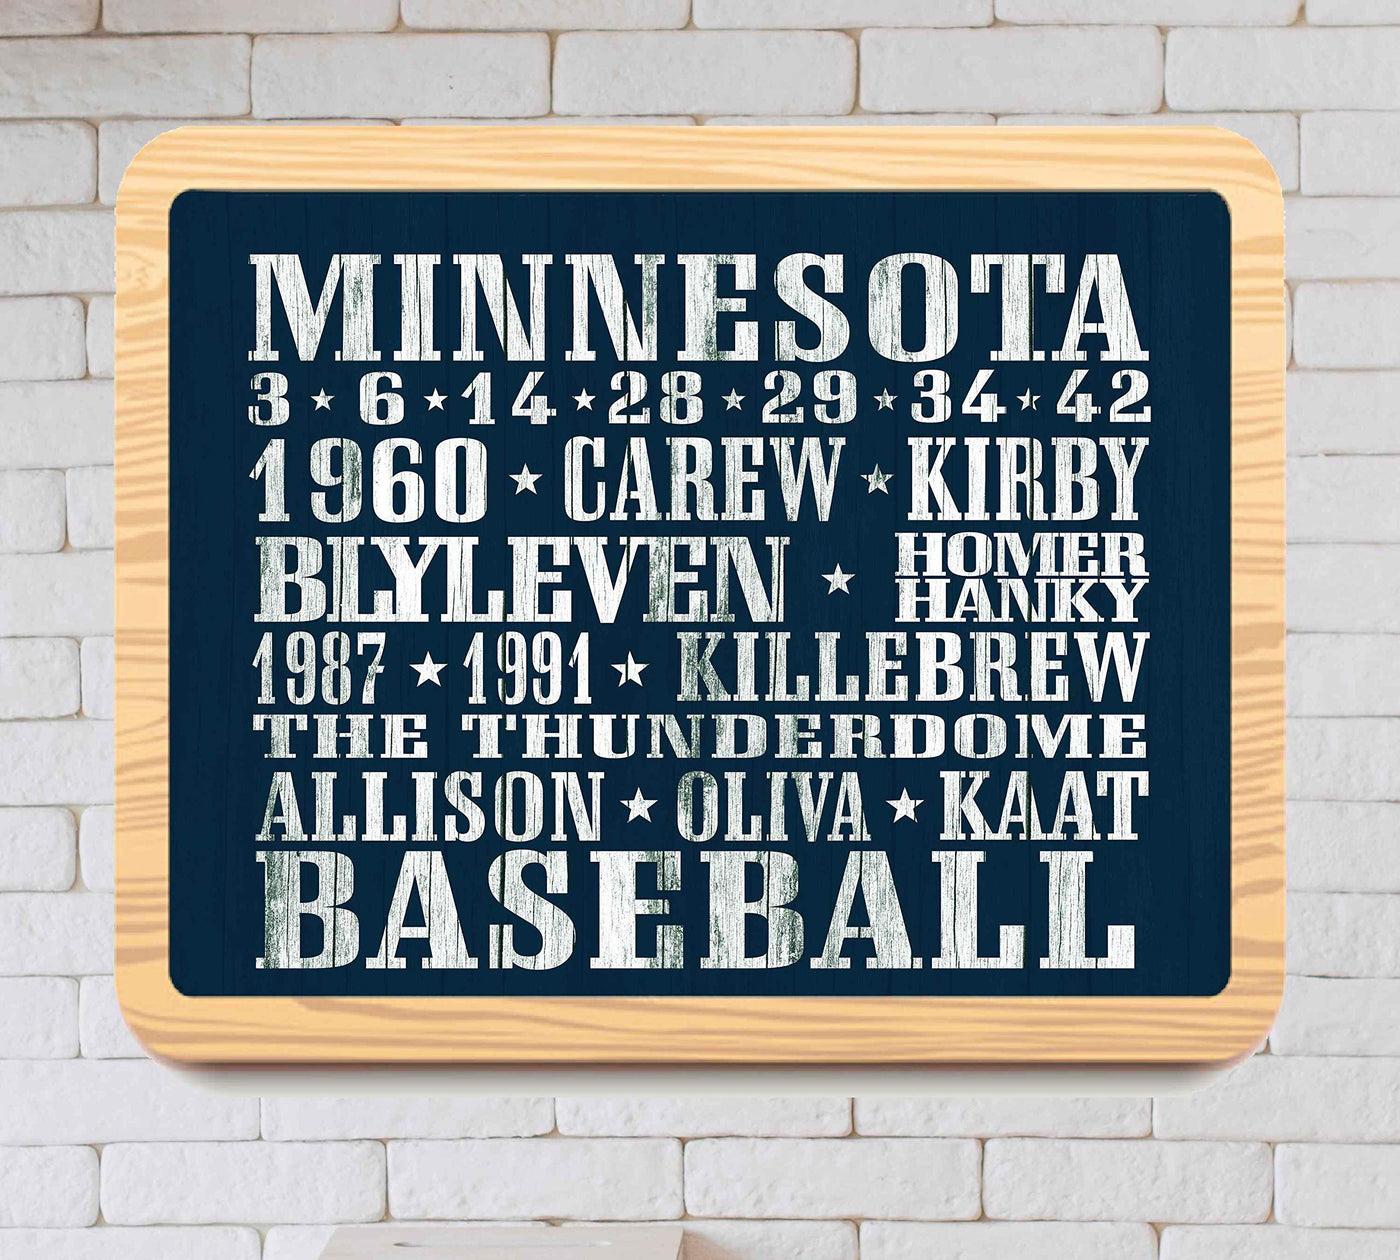 Minnesota Twins-Baseball-Vintage Sports Wall Decor- 10 x 8"- Retro MLB Players Poster Print-Ready to Frame. Baseball Typographic Art Sign. Home-Office-Bar D?cor. Perfect for Locker Room-Man Cave.